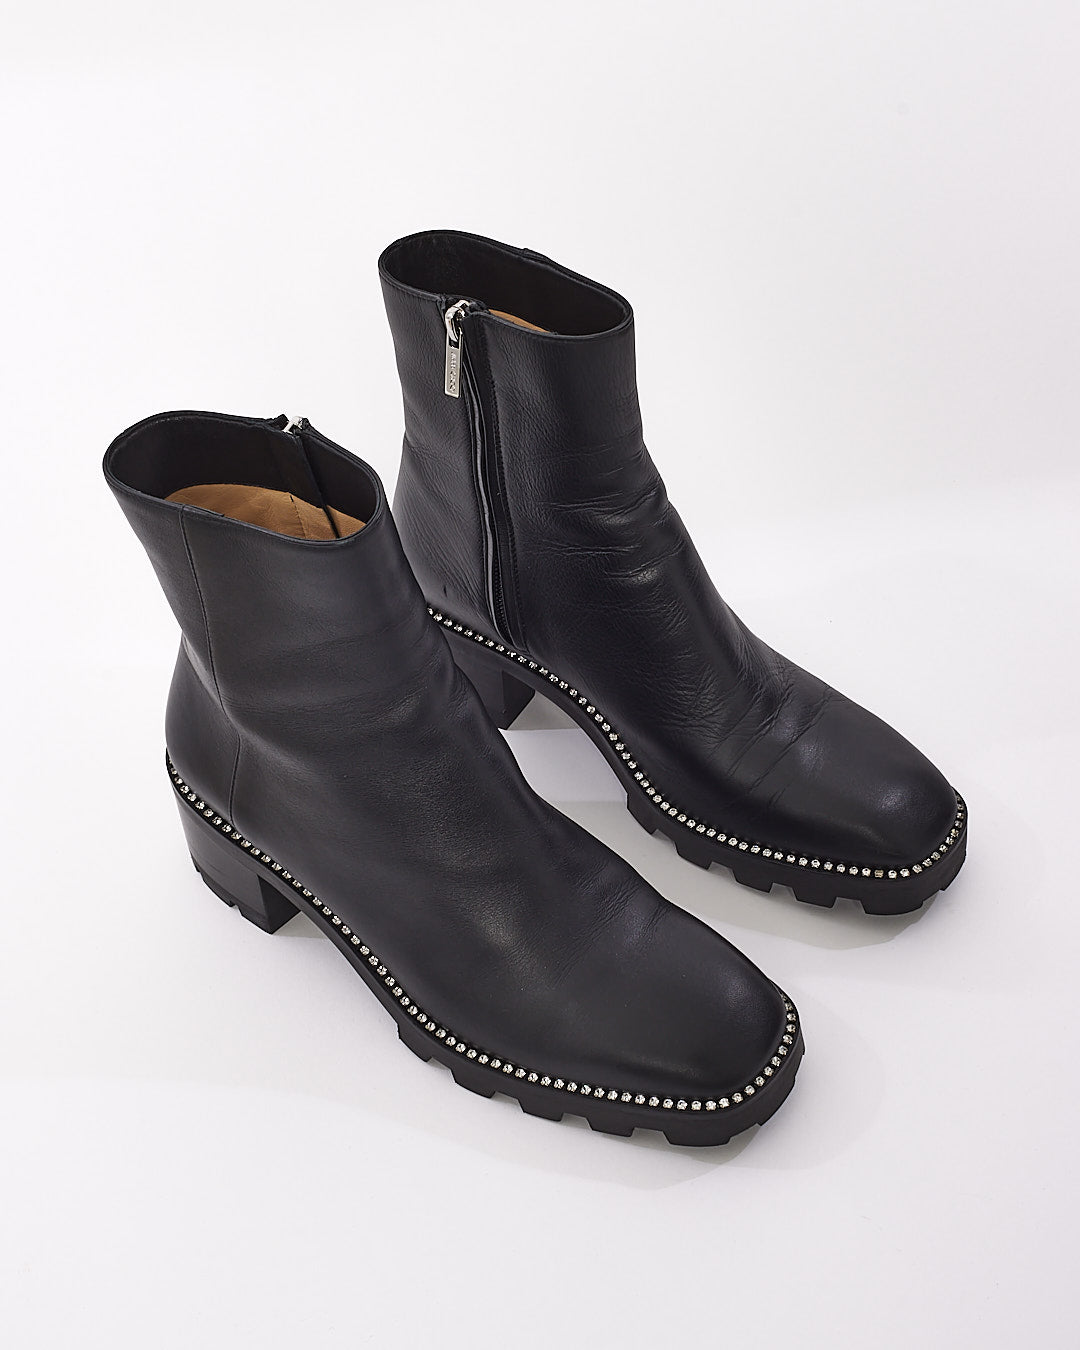 Jimmy Choo Black Leather Rhinestone Trim Boots - 39